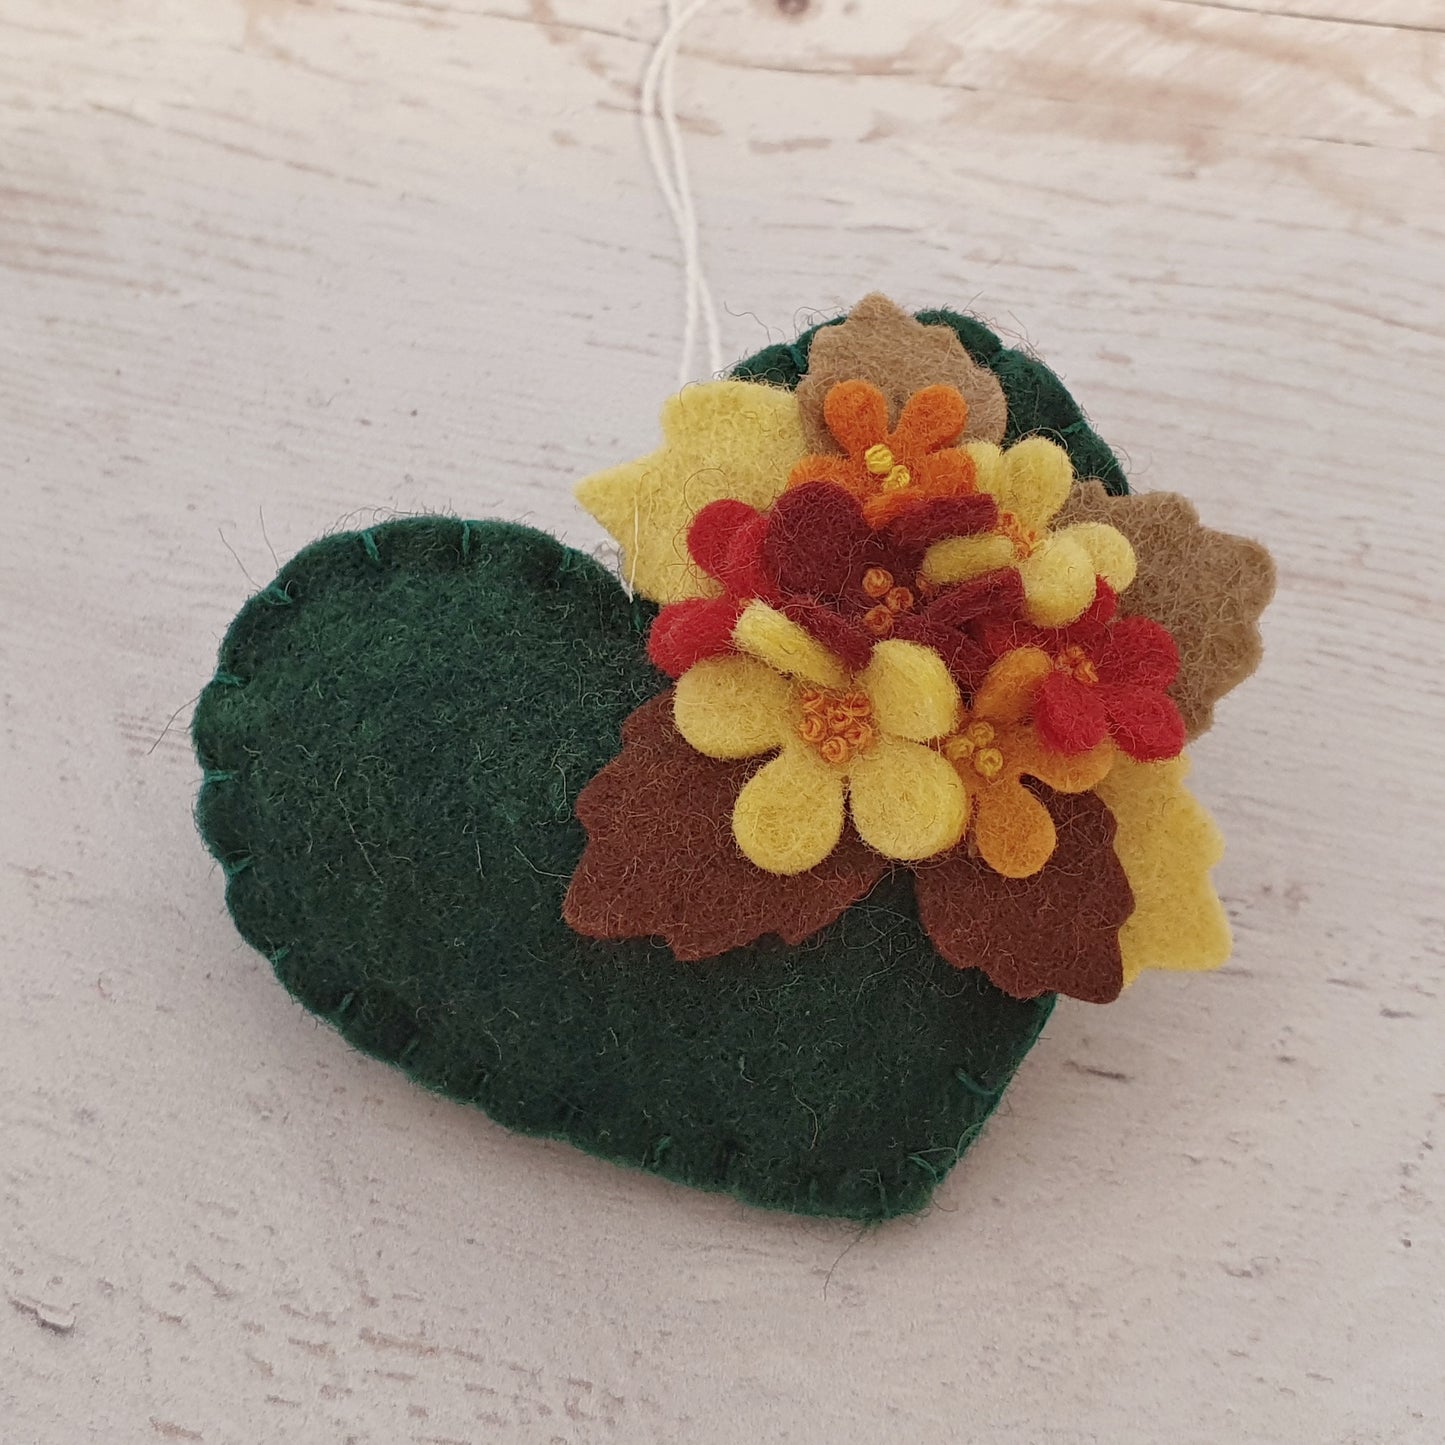 Fall flowers heart ornament - felt home decoration